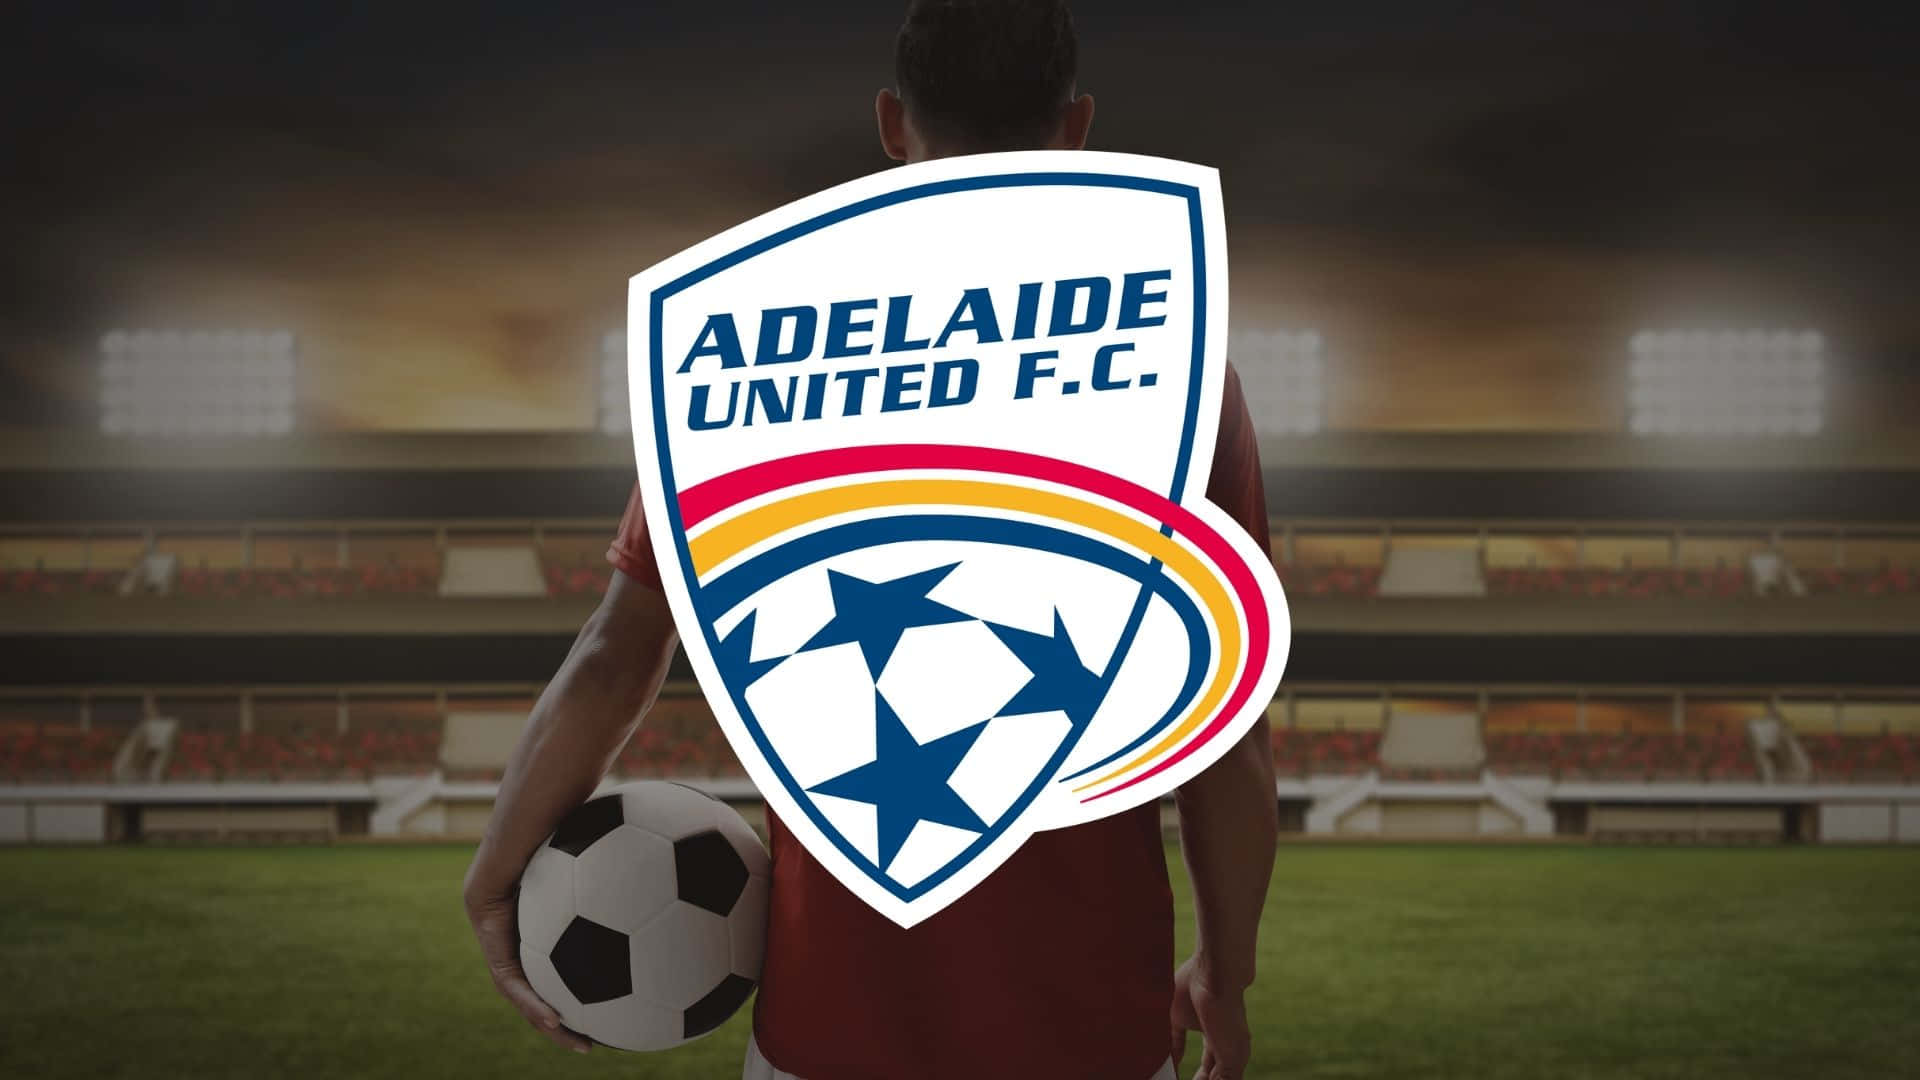 Adelaide United soccer team in action Wallpaper